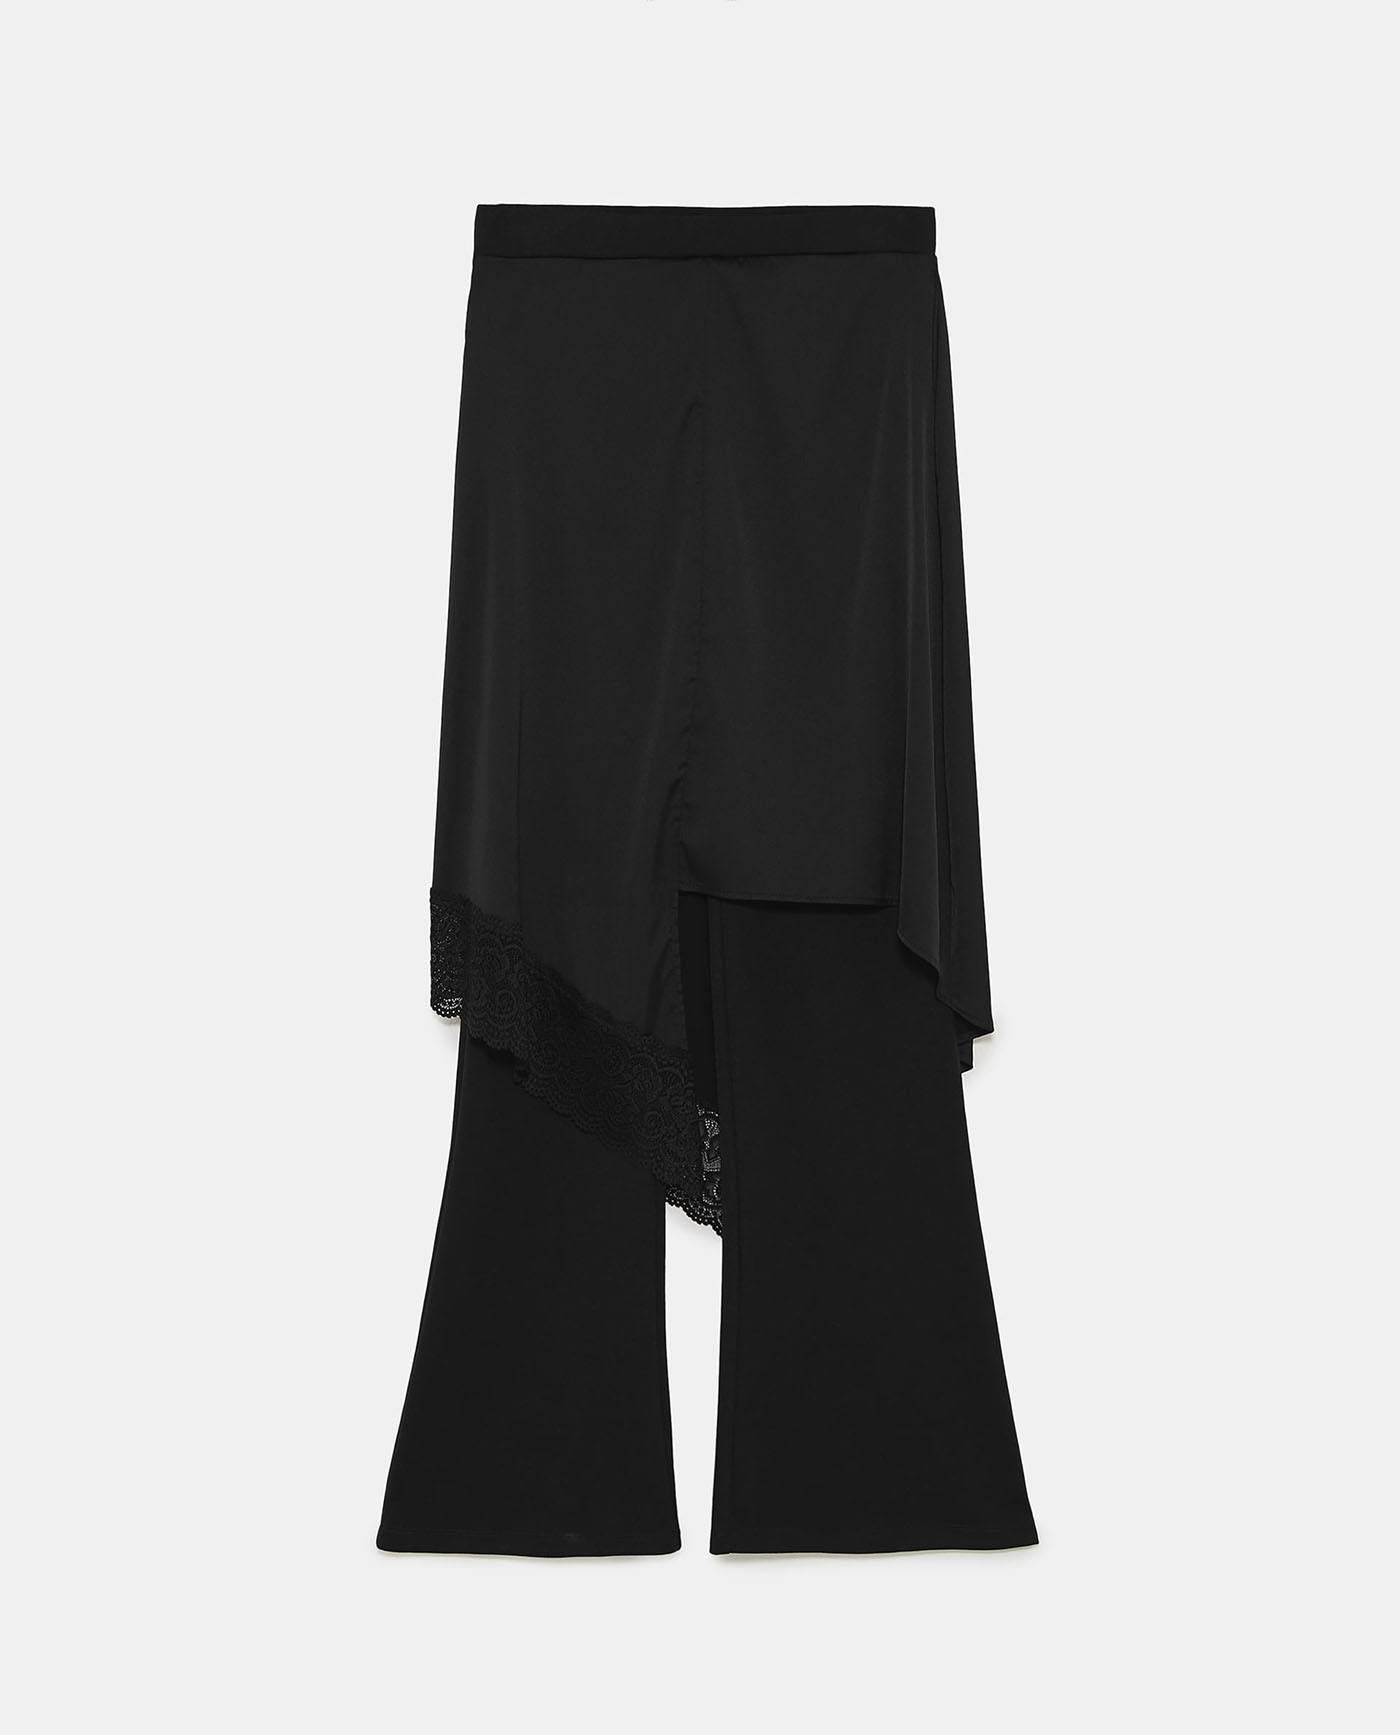 moda Fashion  skirt over pants saia-calça zara TRF design fashiondesign black lace